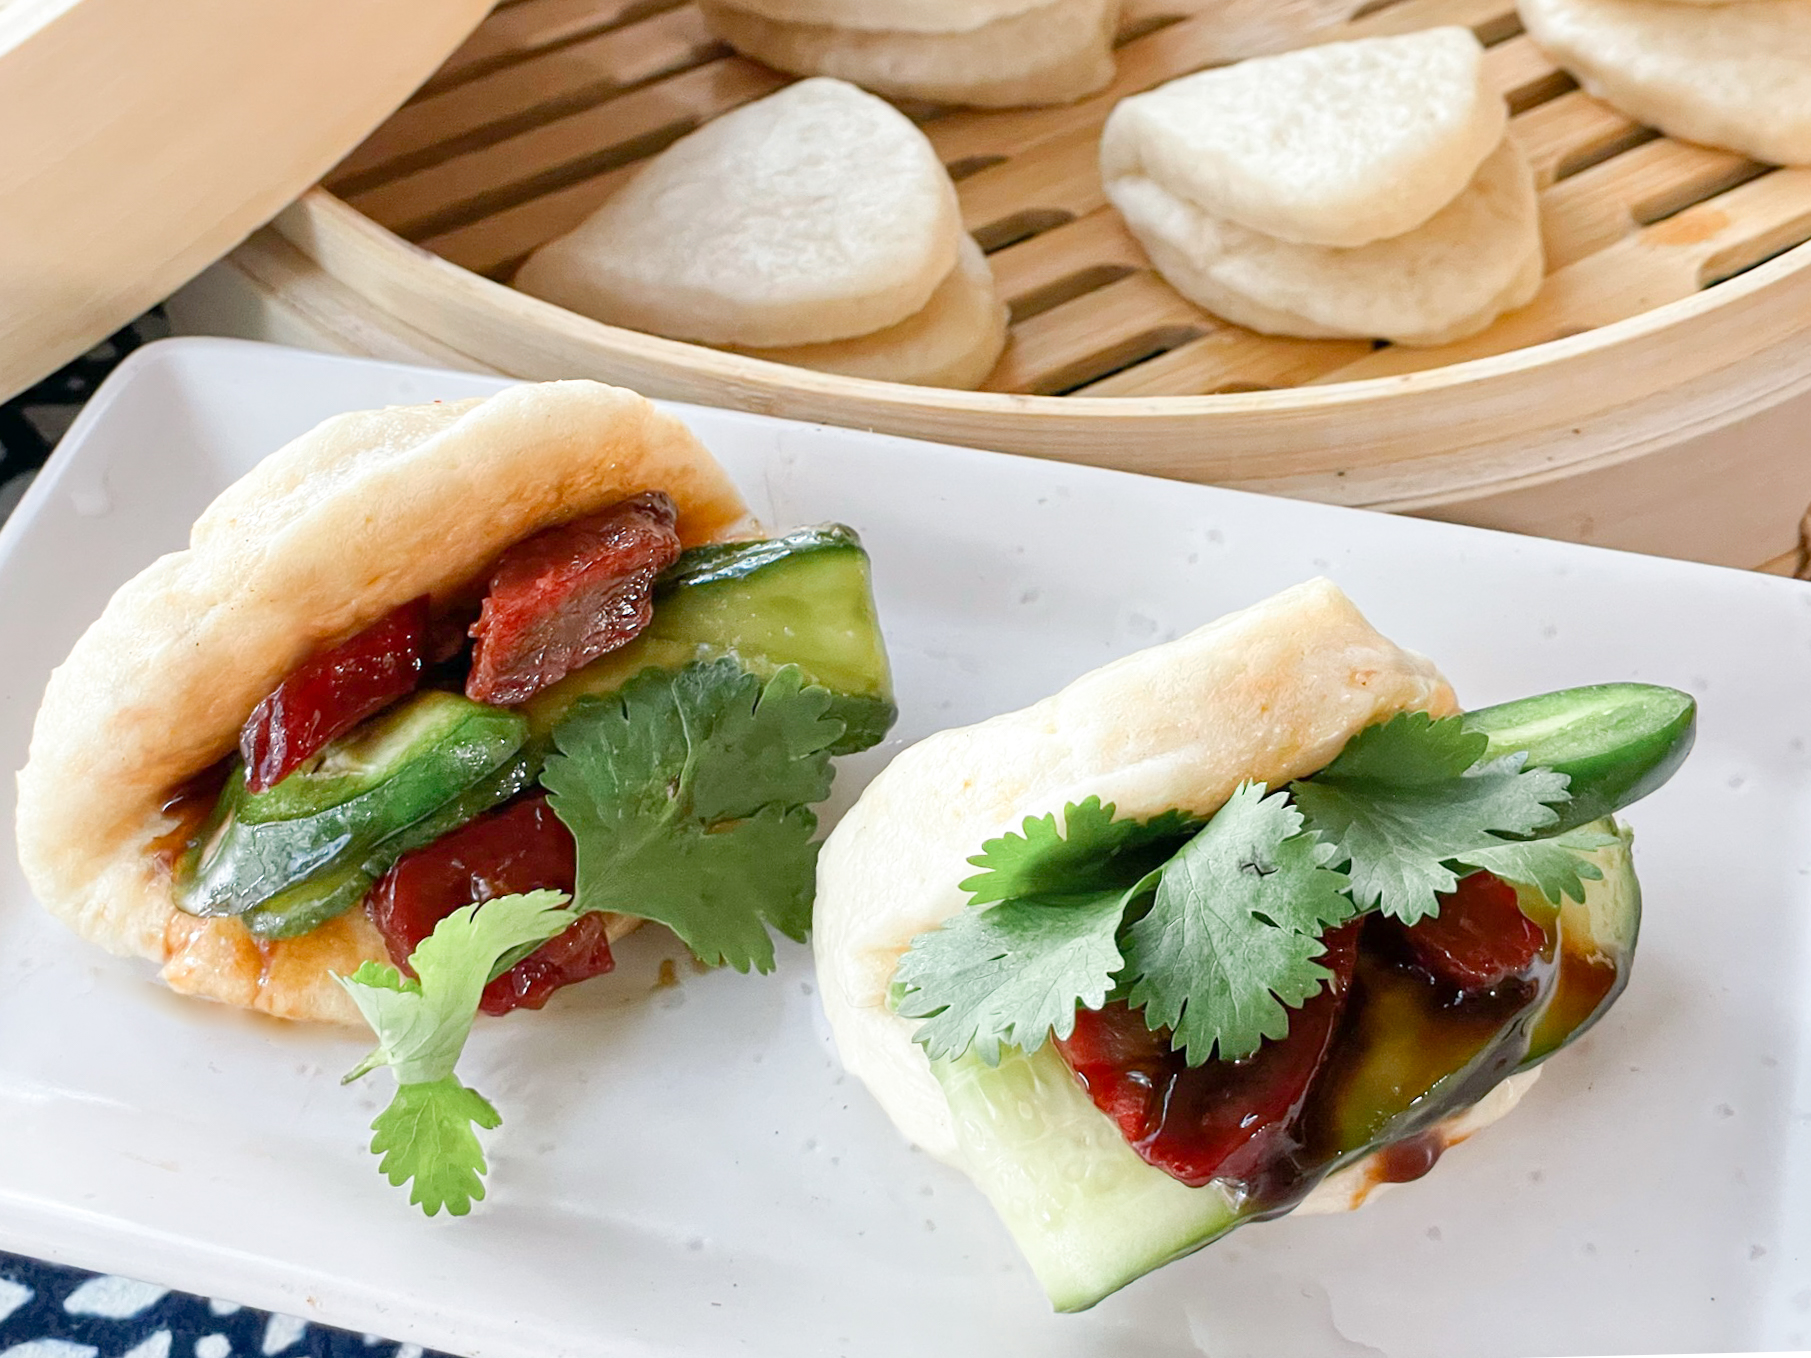 Cantonese style savory pork bun sandwiches